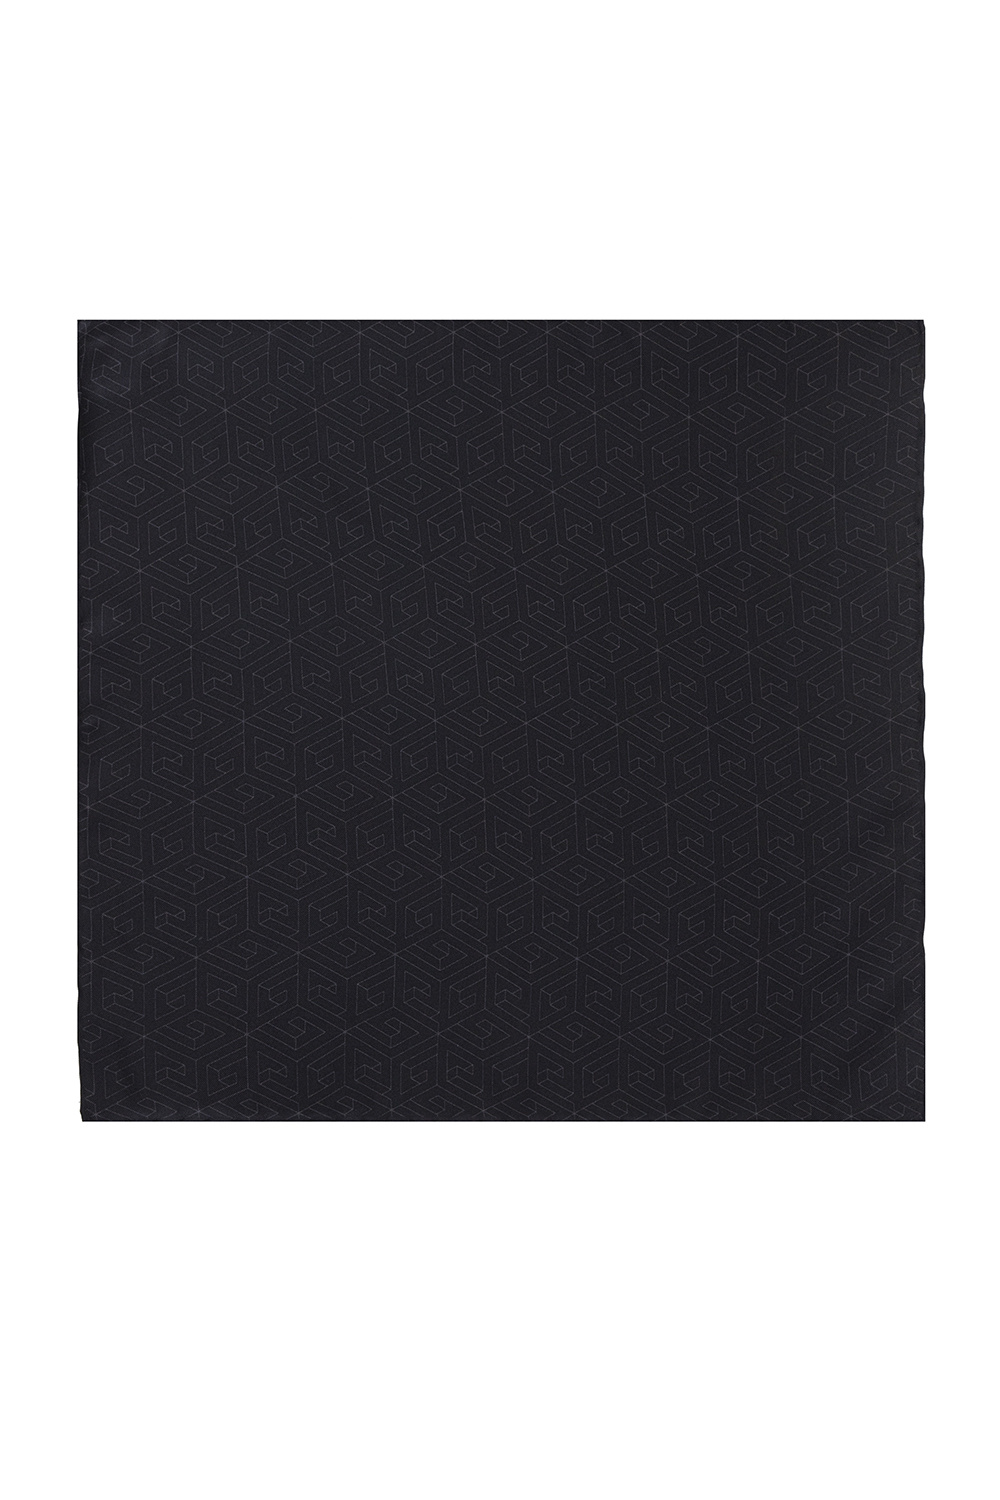 Givenchy Silk pocket square